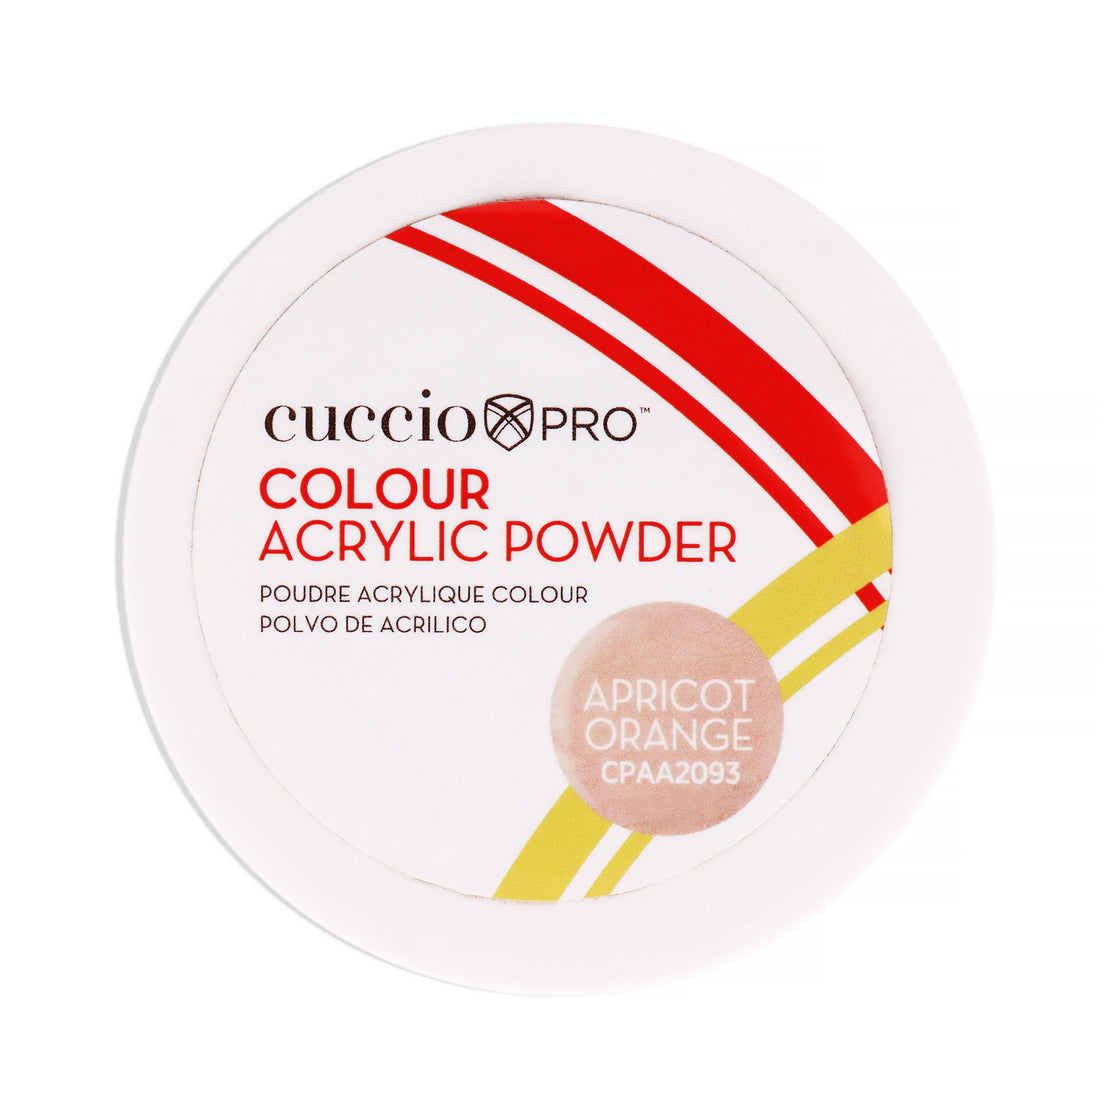 Colour Acrylic Powder - Apricot Orange by Cuccio PRO for Women - 1.6 oz Acrylic Powder